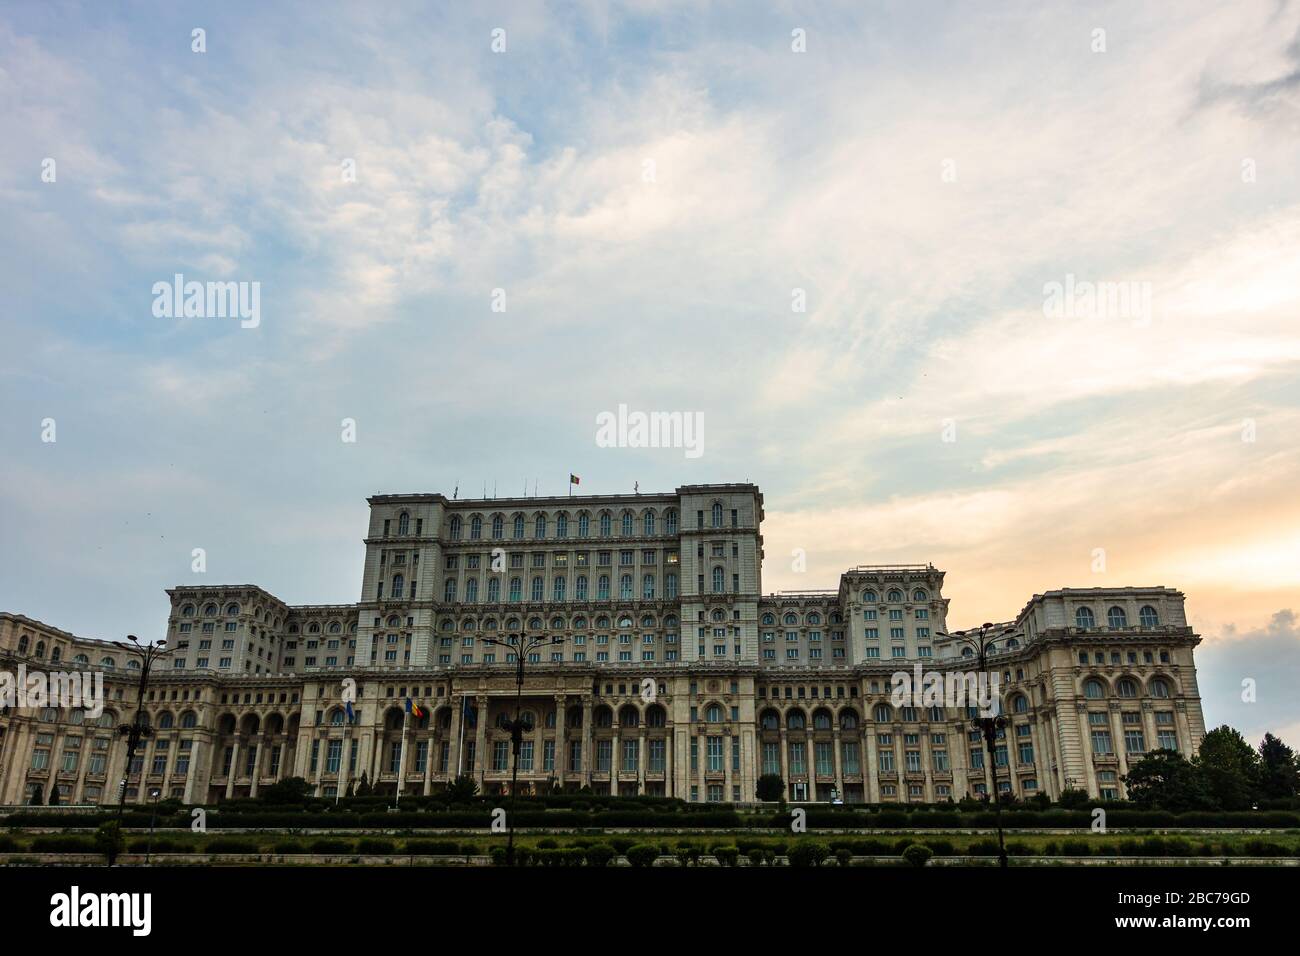 Famous Palace of the Parliament (Palatul Parlamentului) in Bucharest, capital of Romania Stock Photo